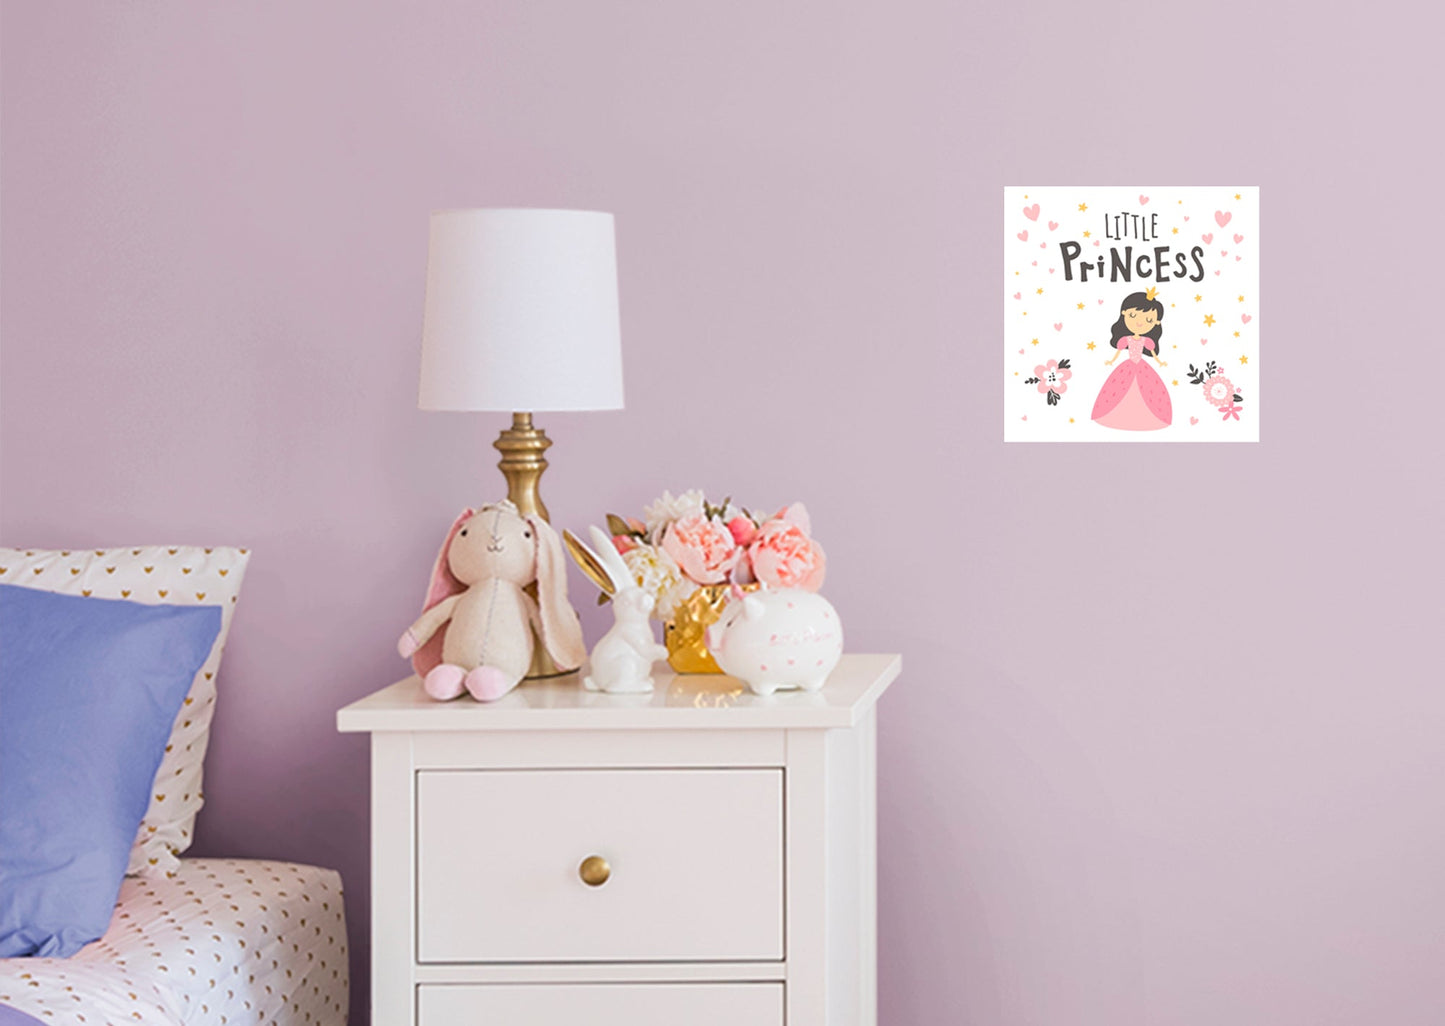 Nursery Princess:  Pink Hearts Mural        -   Removable Wall   Adhesive Decal